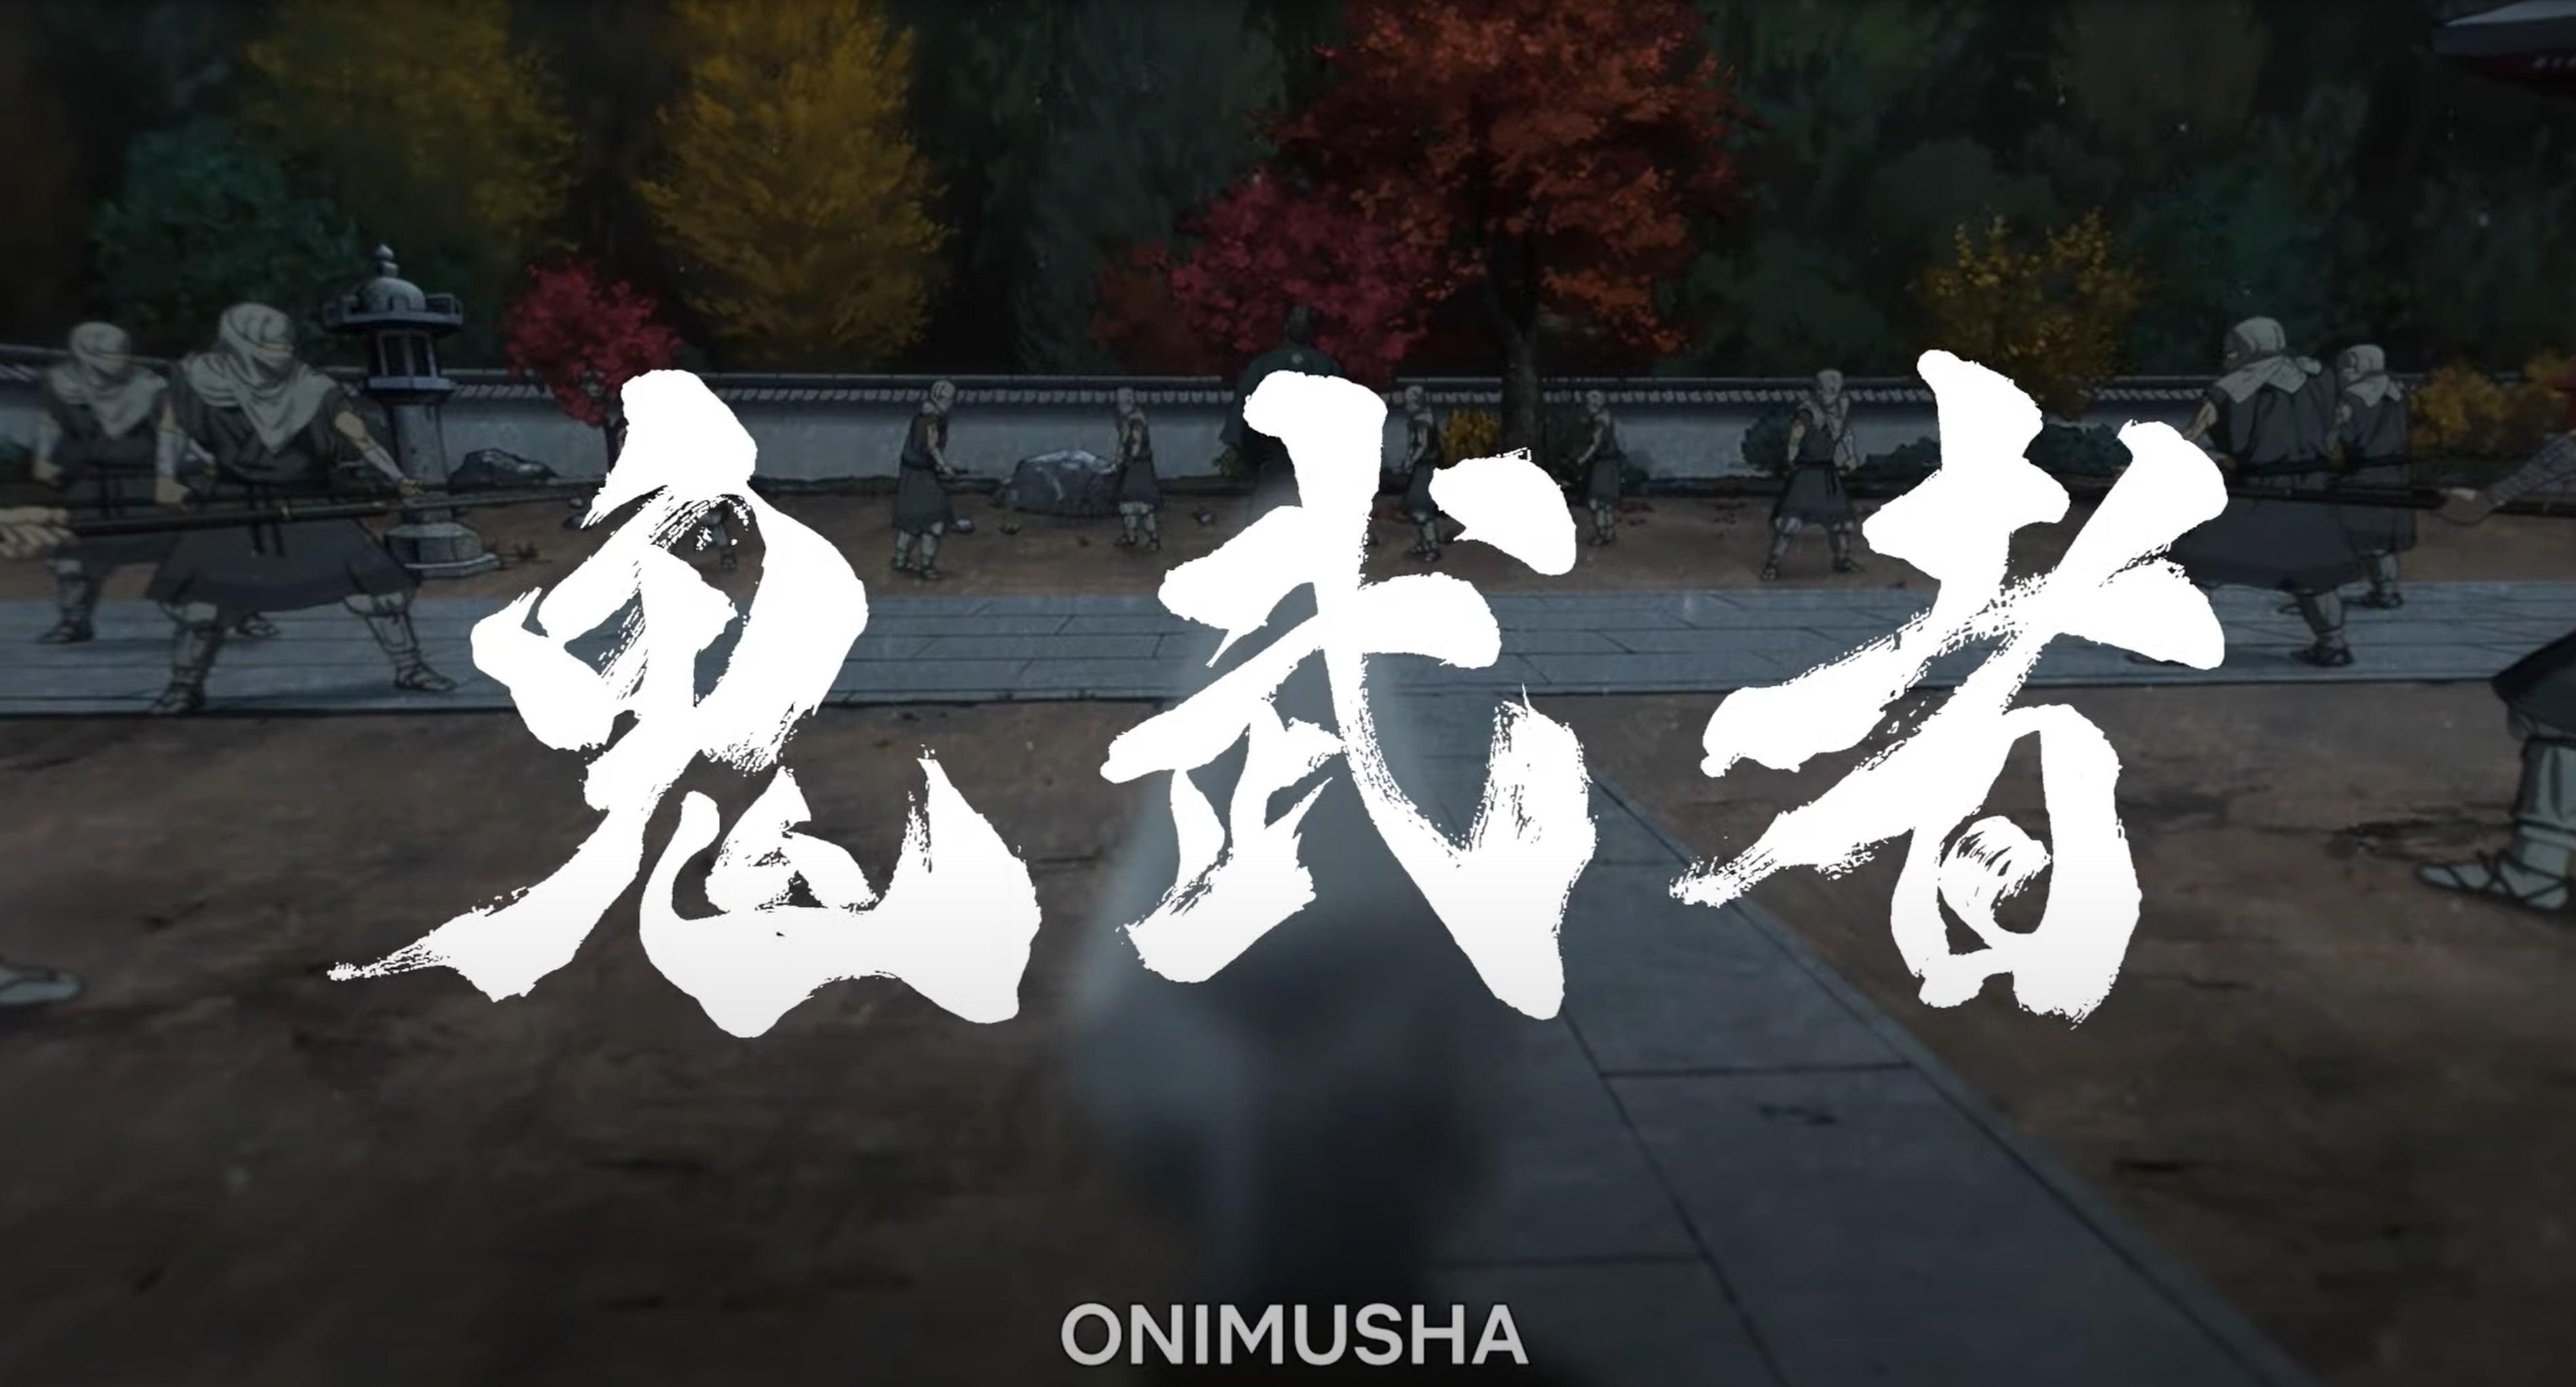 Flix Onimusha Anime Just Got Its First Trailer